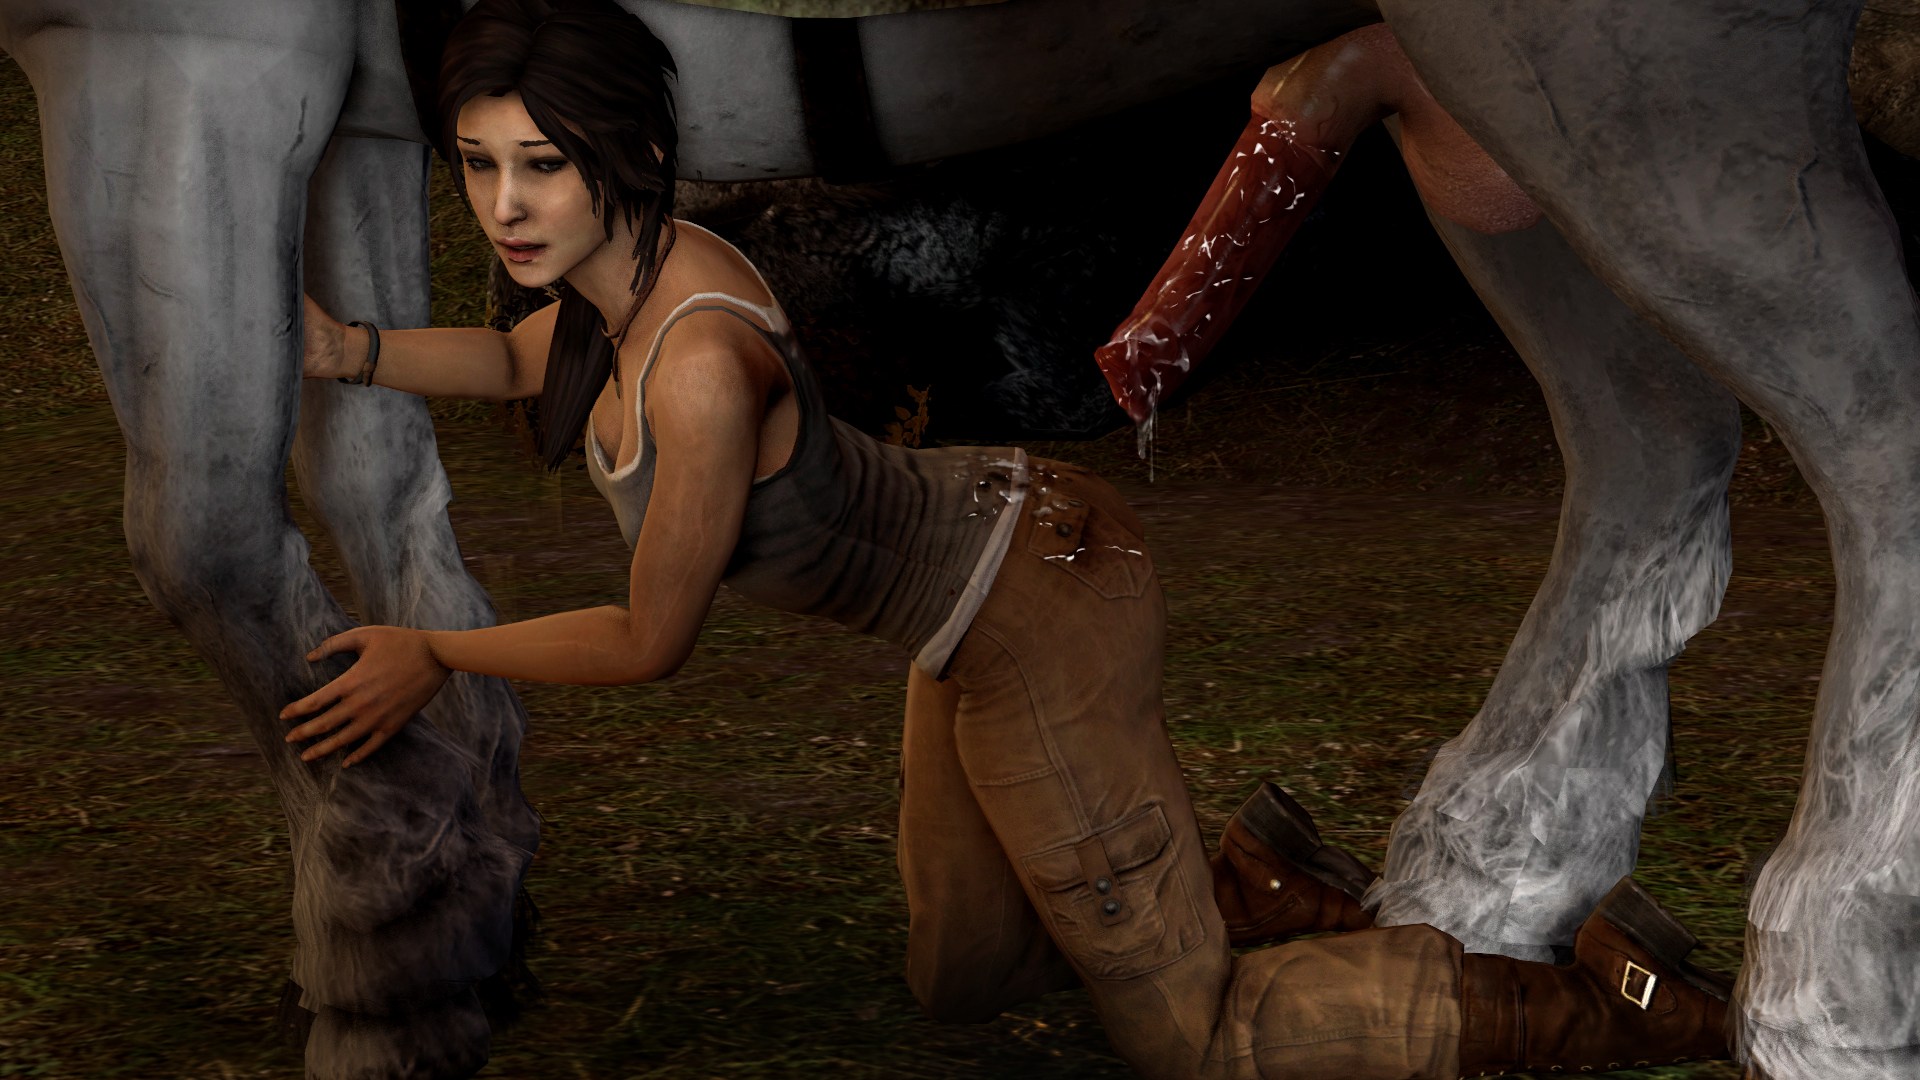 Lara croft with horse